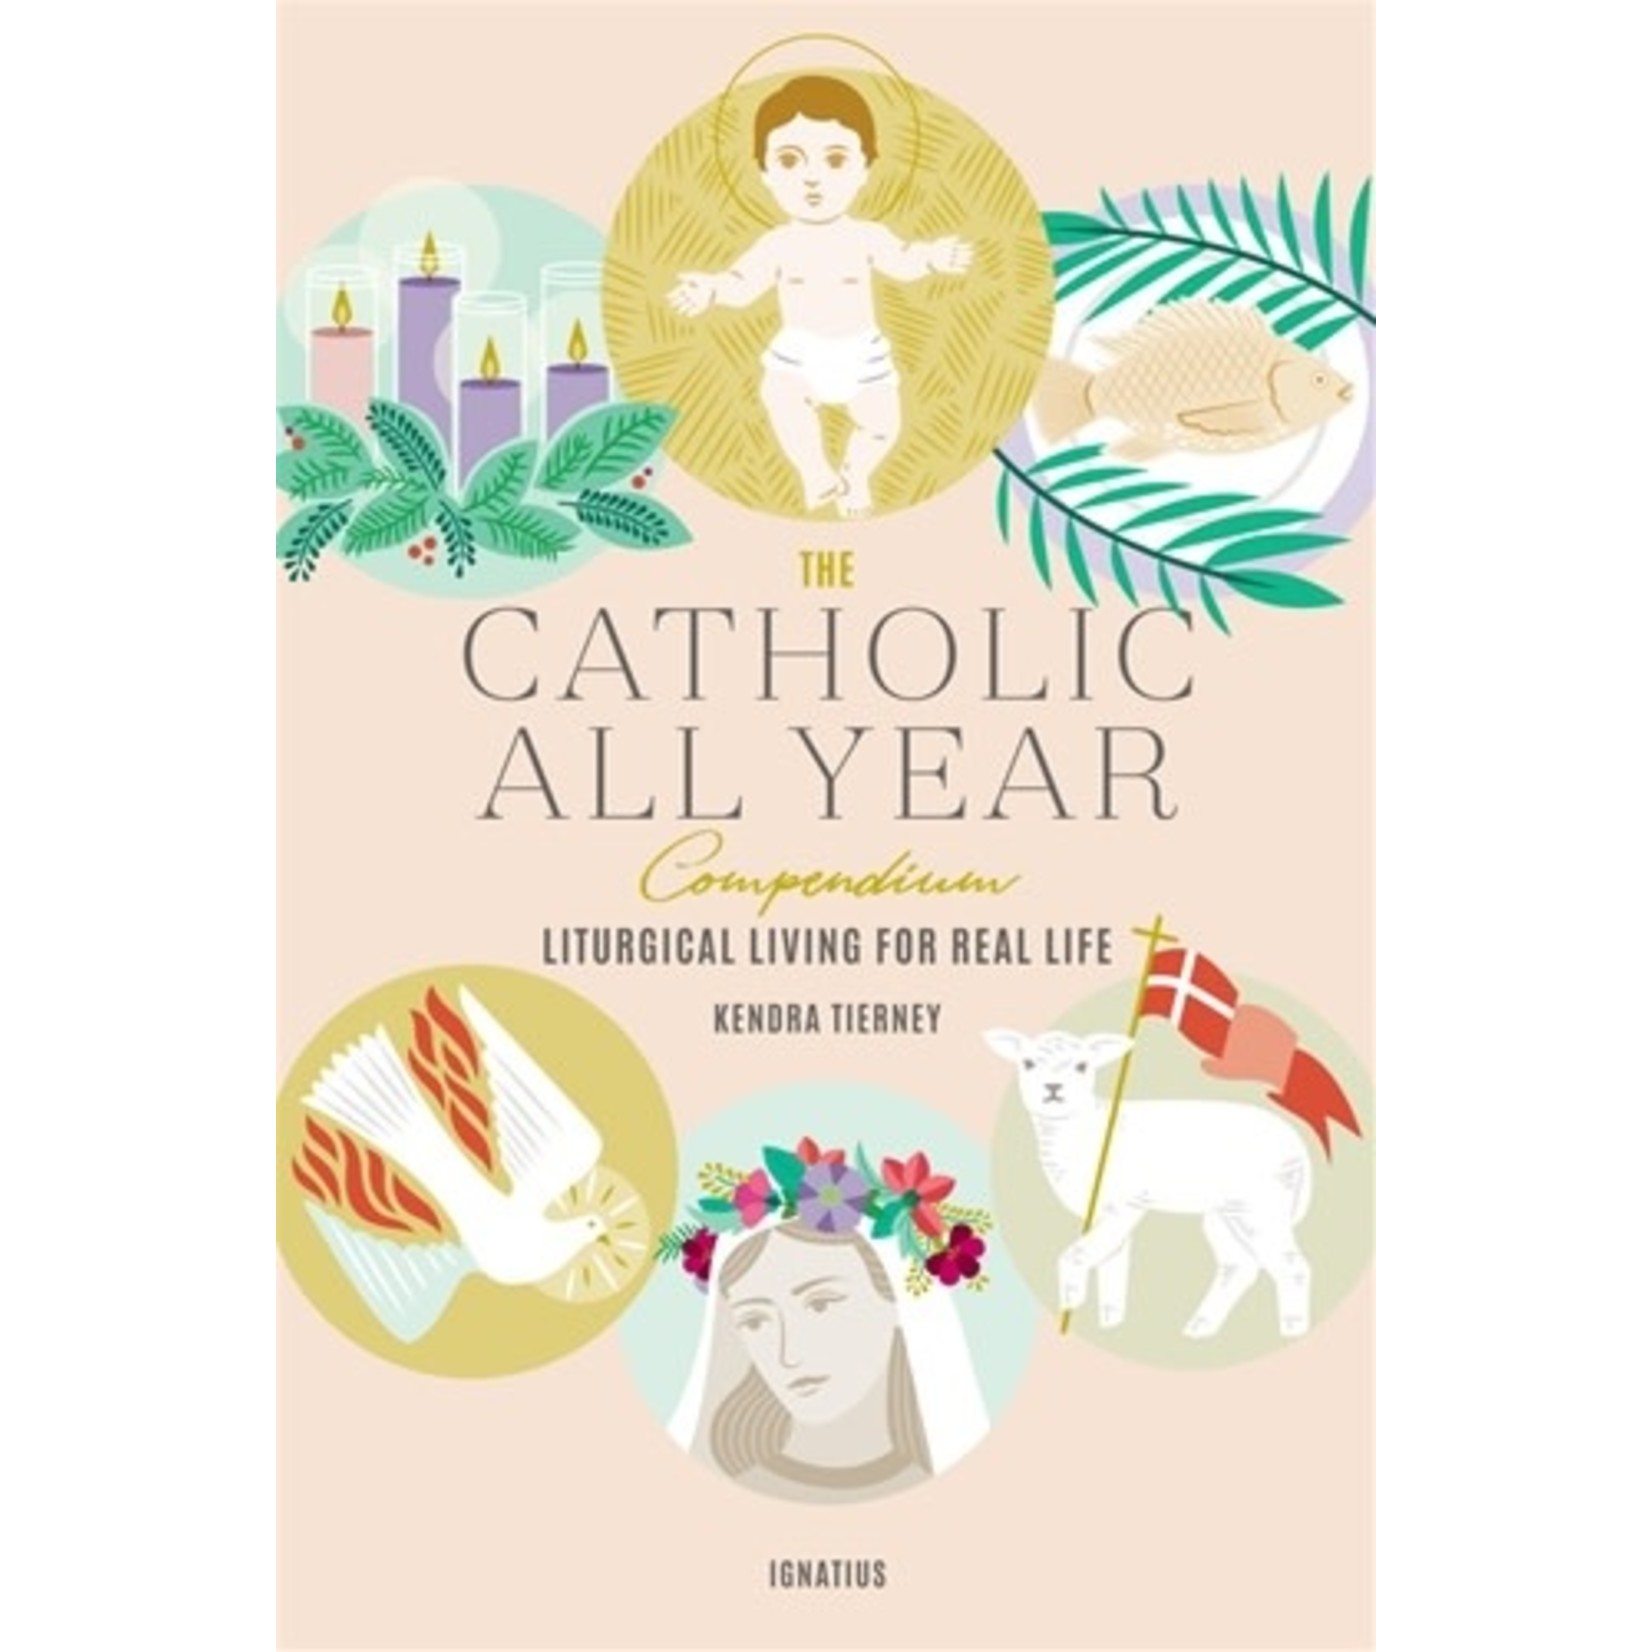 The Catholic All Year Compendium